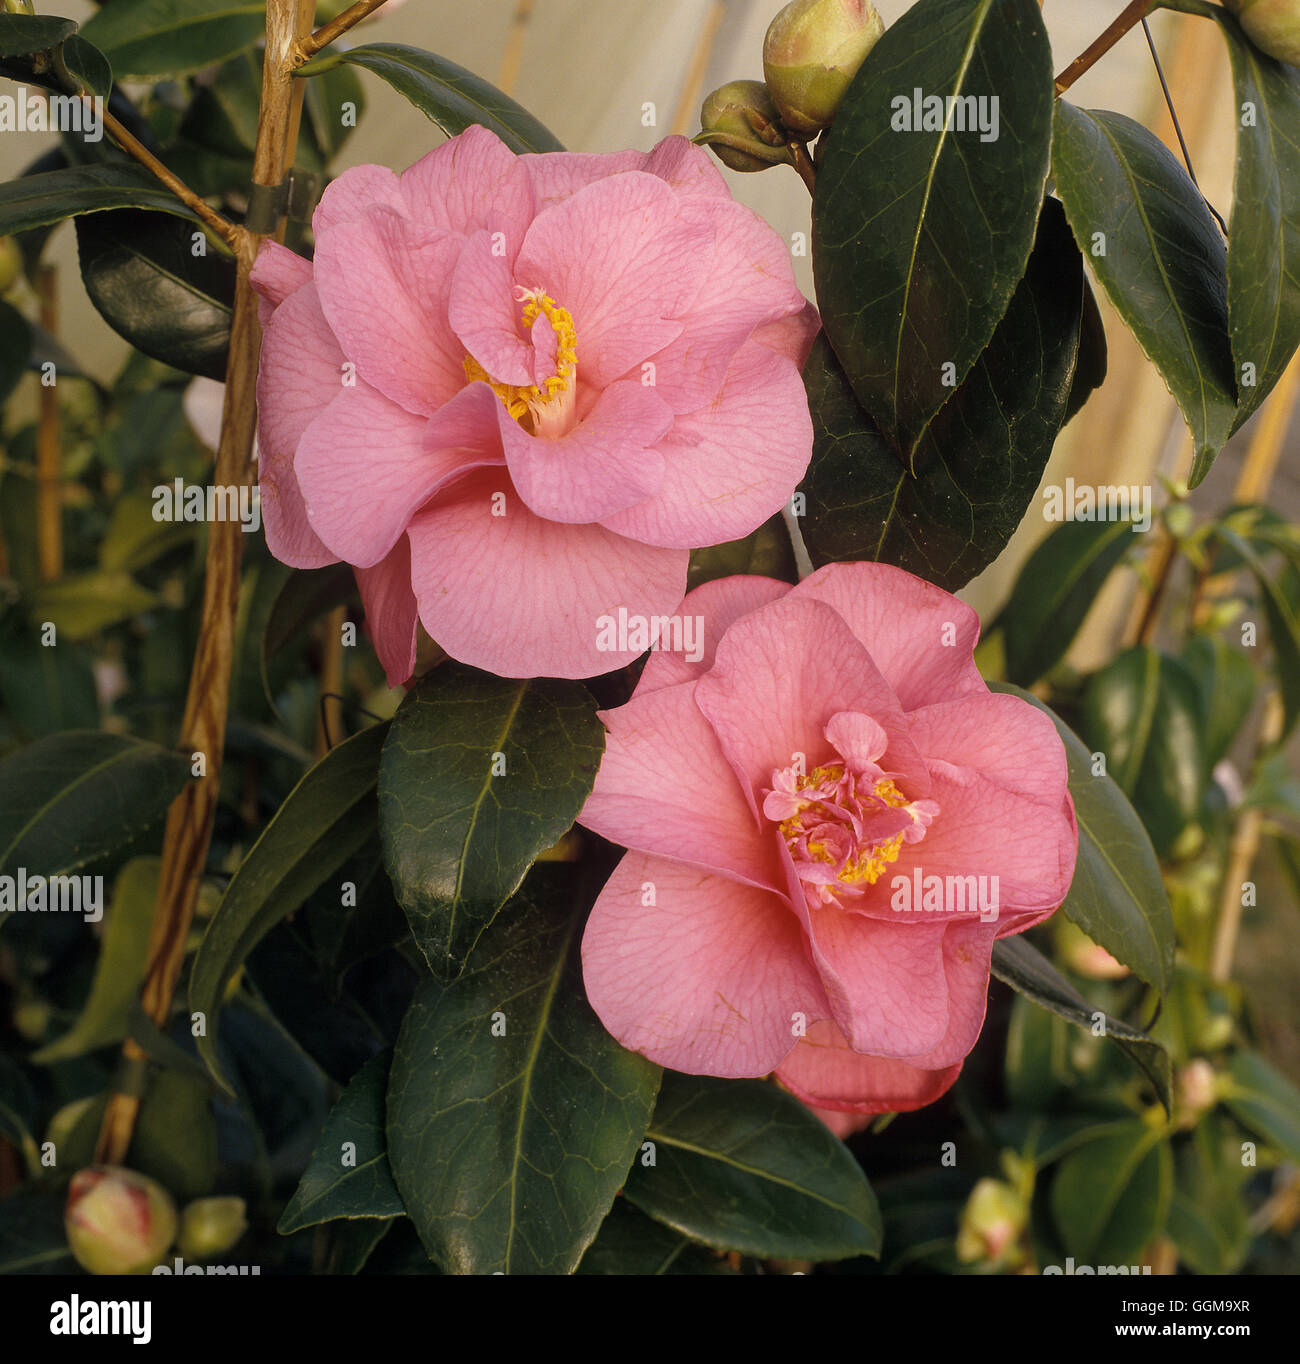 Camellia x williamsii 'Brigadoon' Data: 13/10/2008 Ref: UMW 122062 0002 Foto Stock